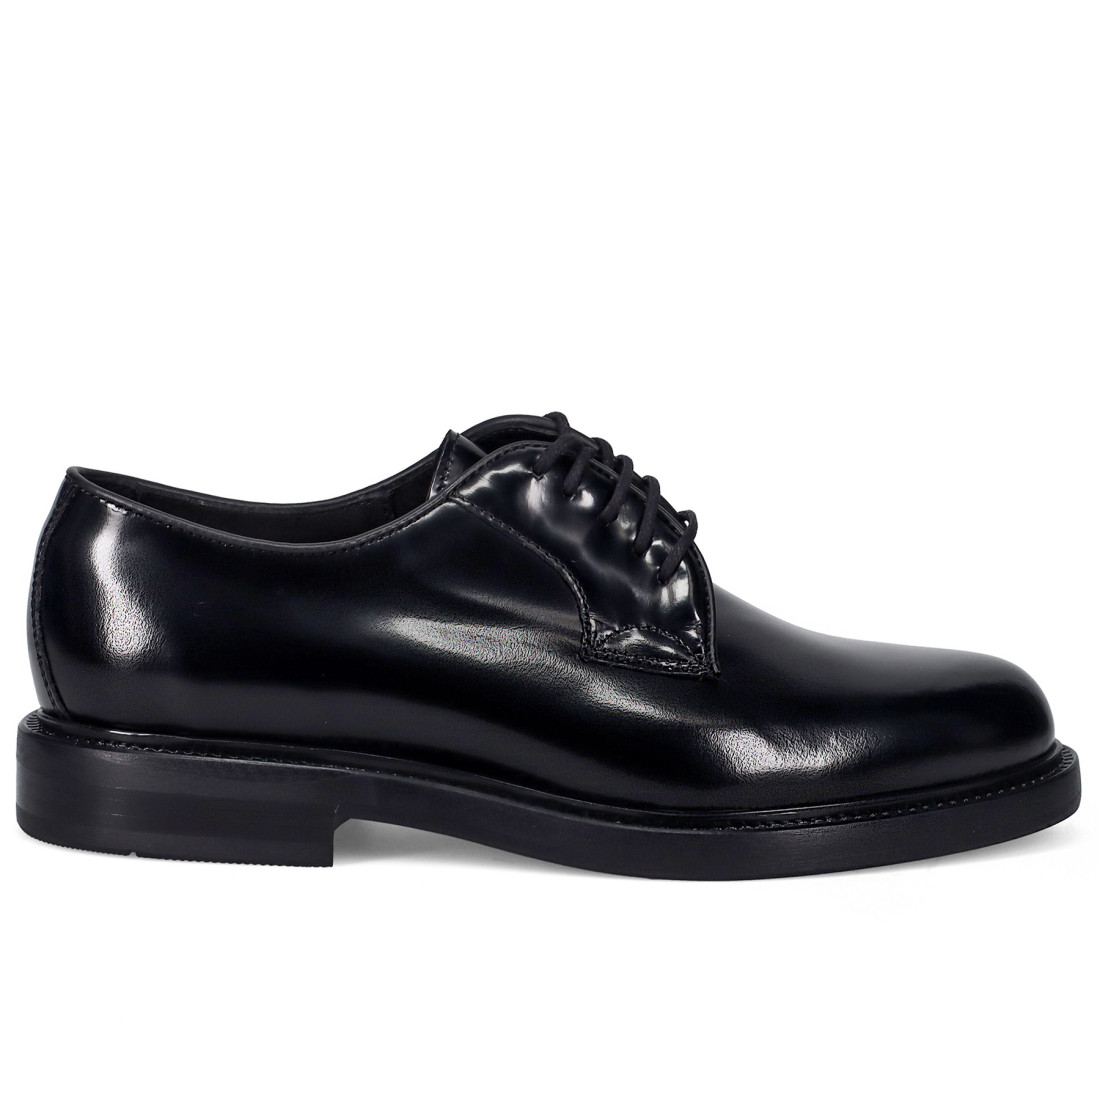 Antica Cuoieria elegant derby shoe in black brushed leather